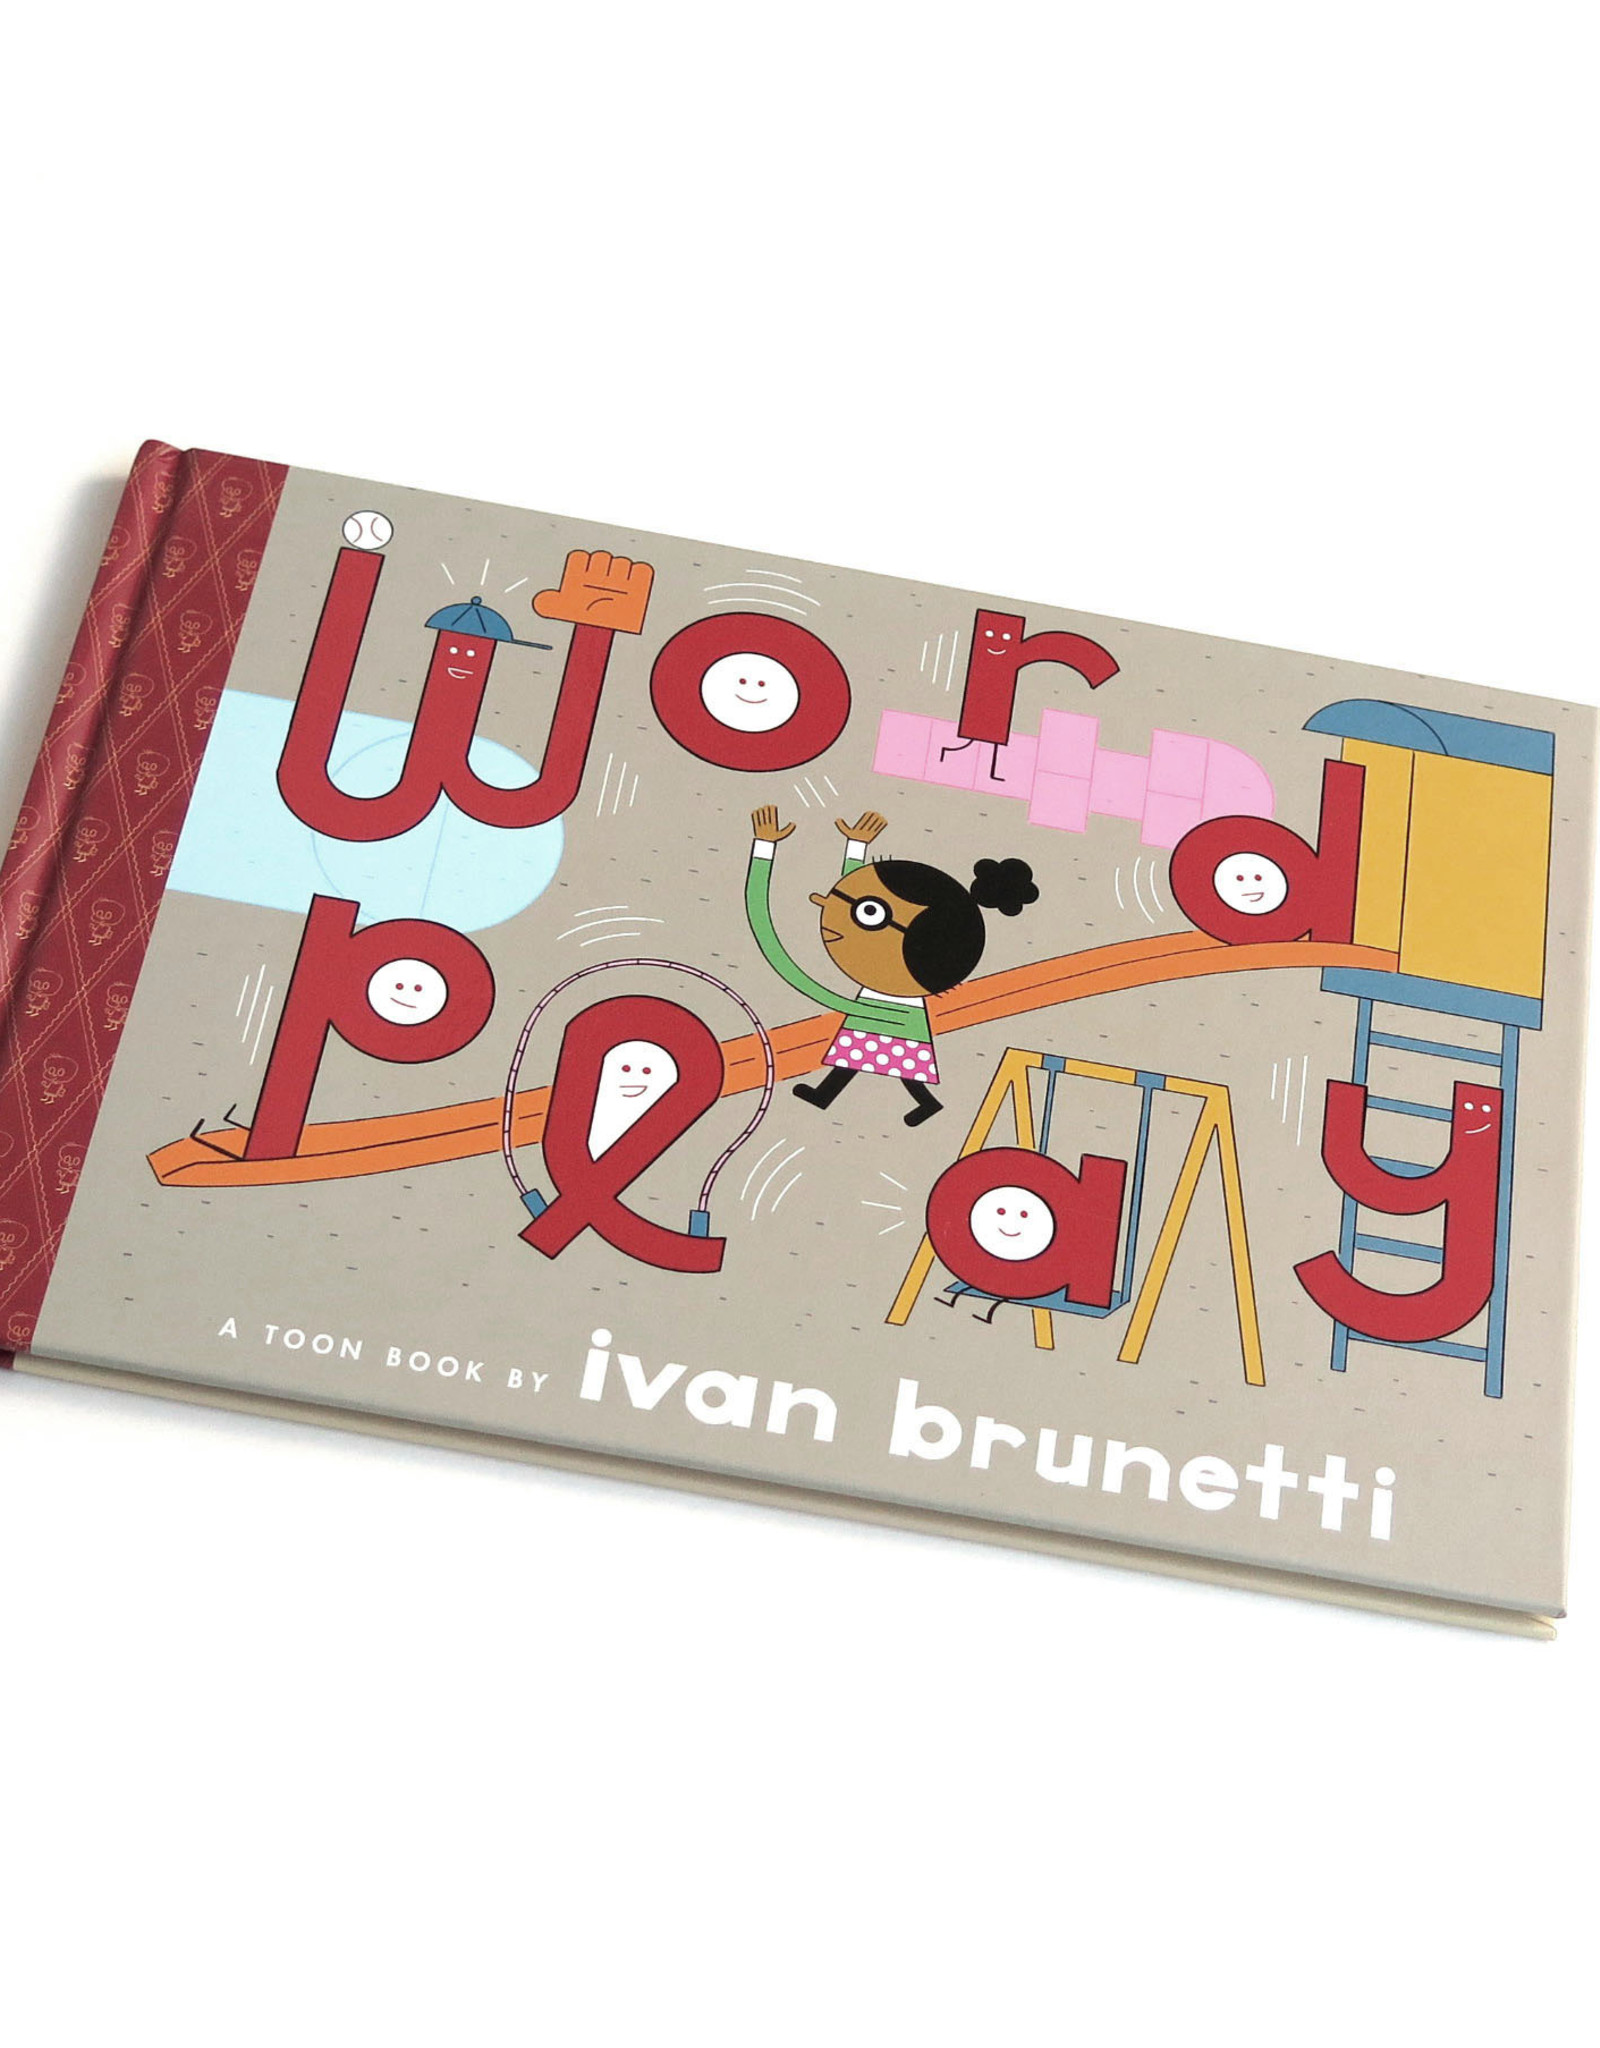 Ivan Brunetti "WORDPLAY" by Ivan Brunetti